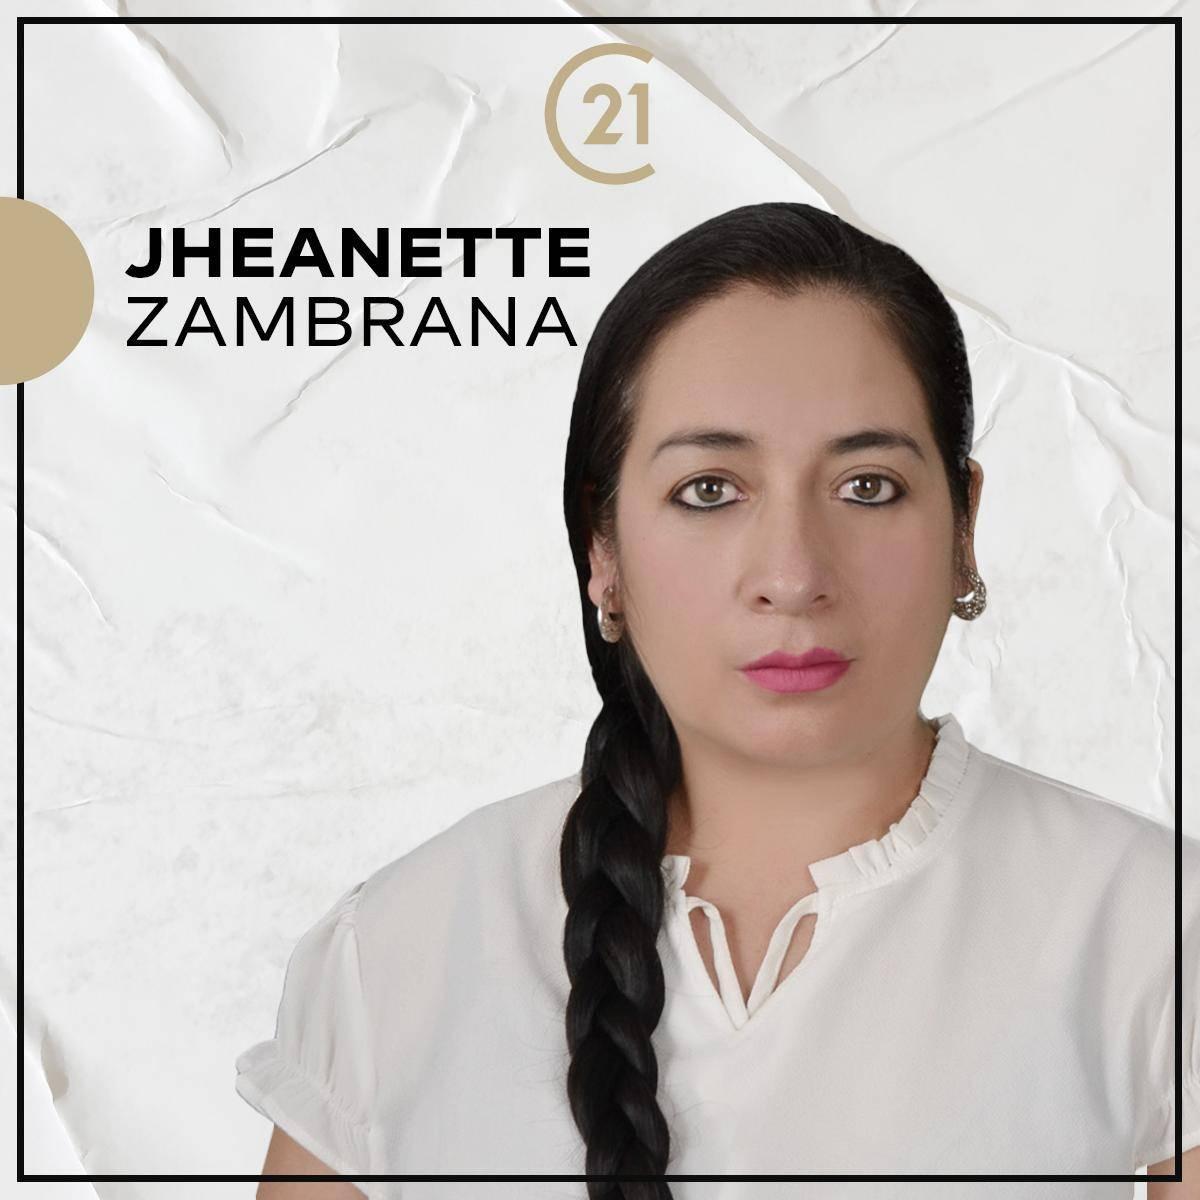 Jheanette Zambrana Century 21